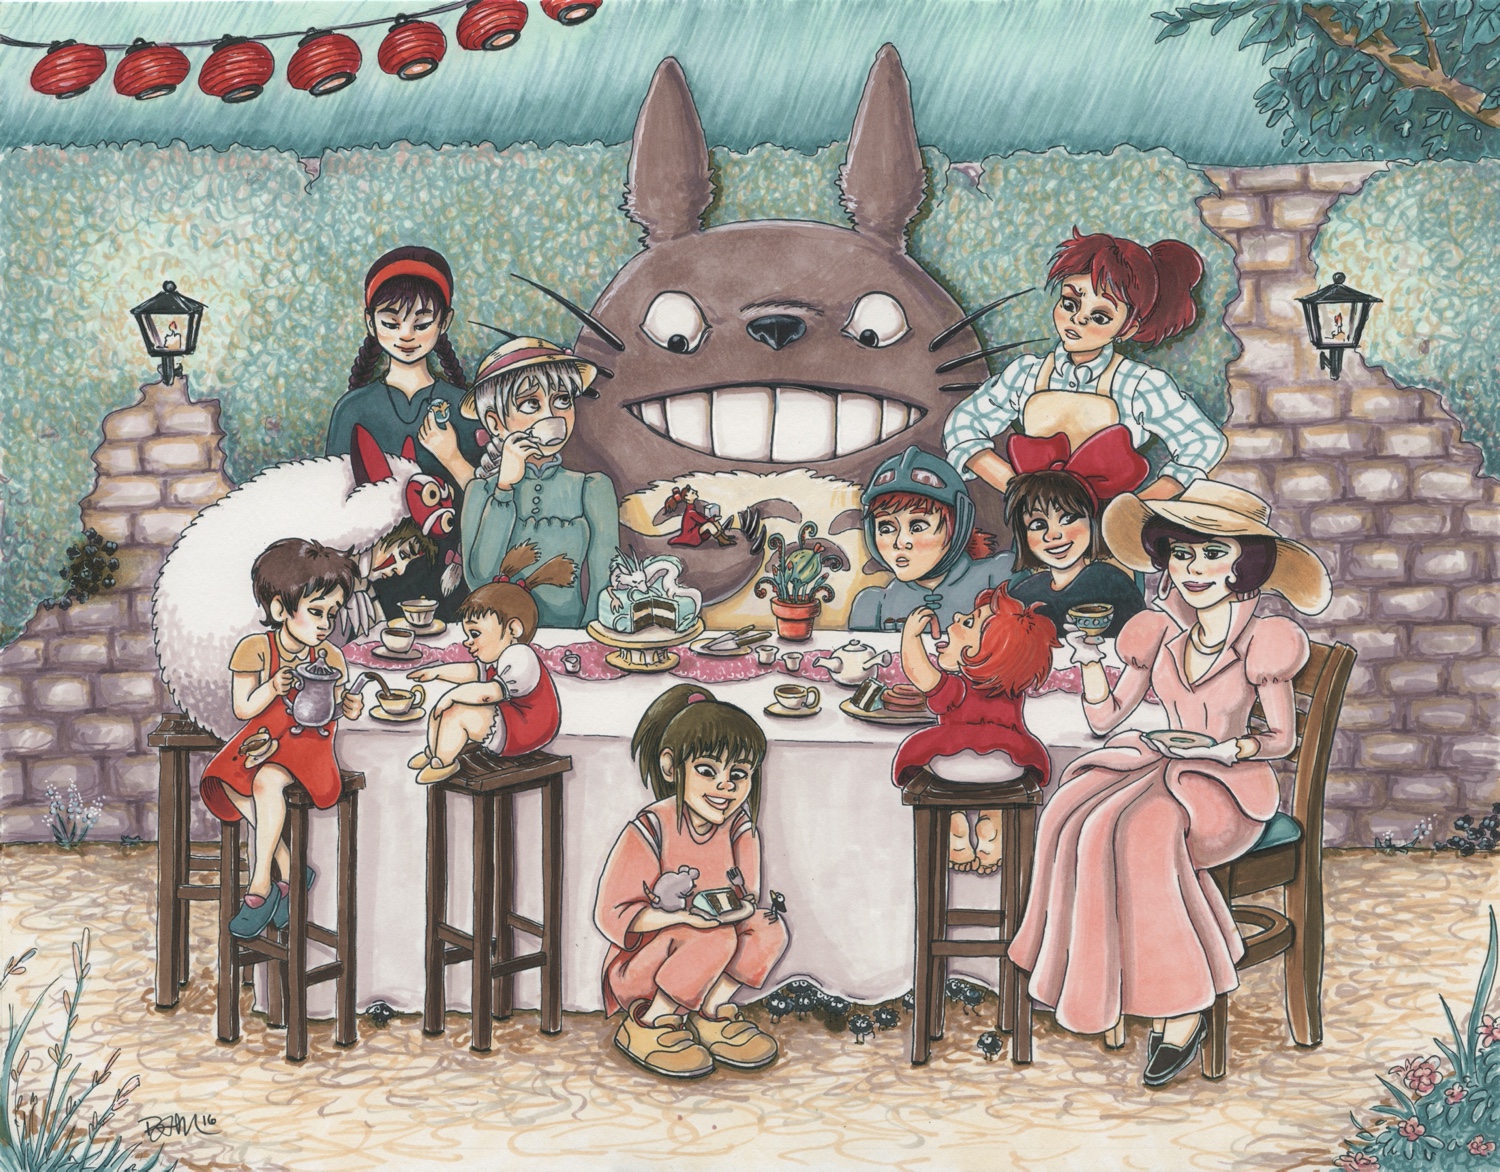 Hayao Miyazaki/Studio Ghibli tribute